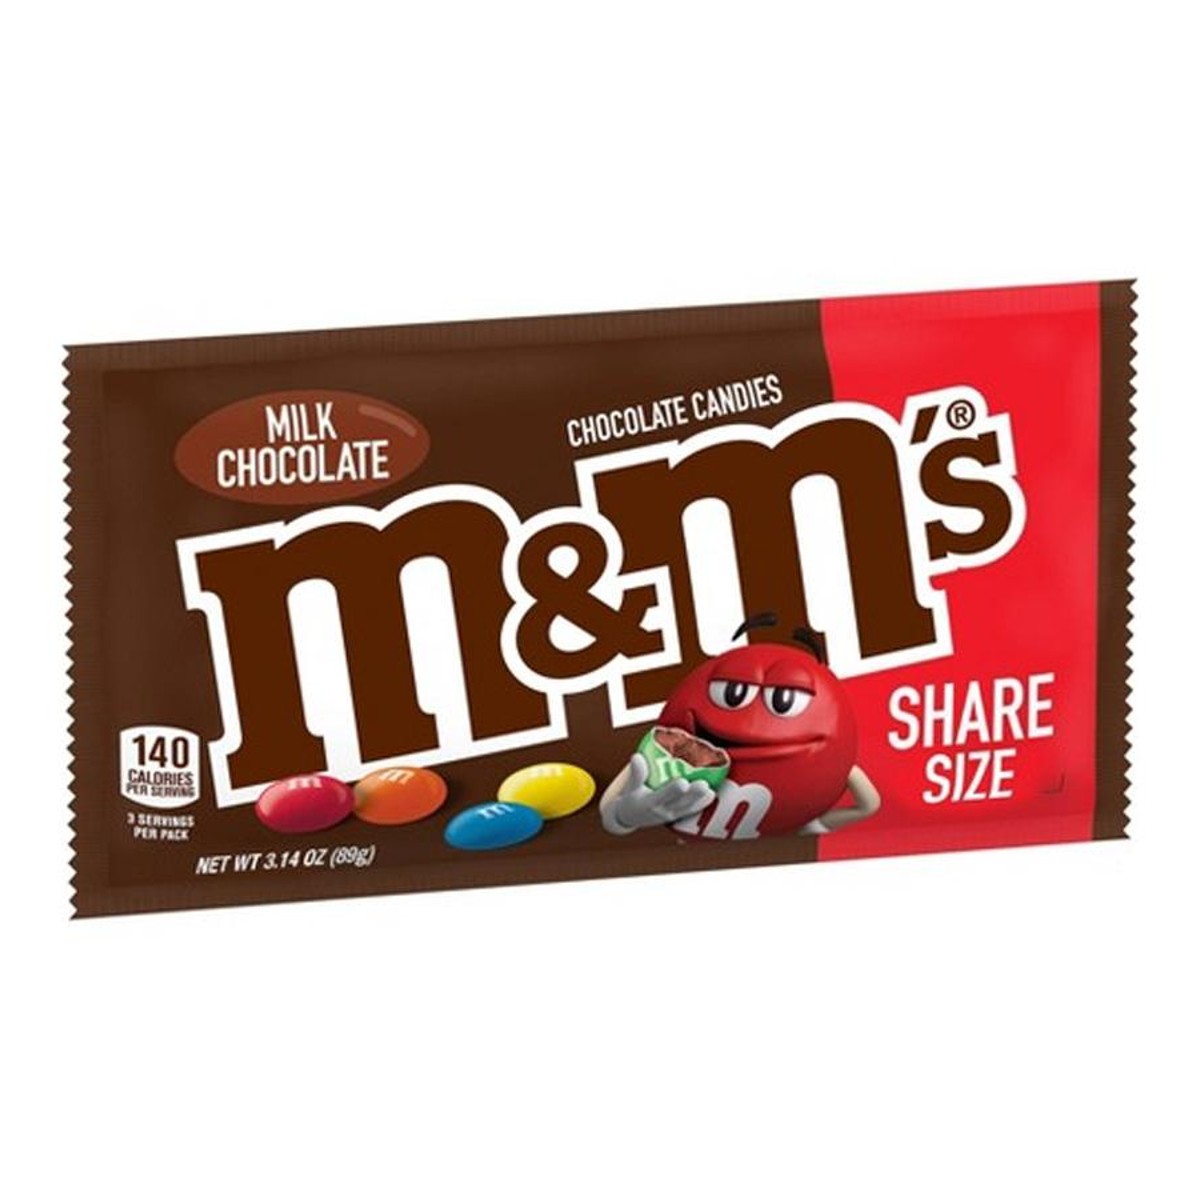 M&M's Peanut King Size - ExtraMile